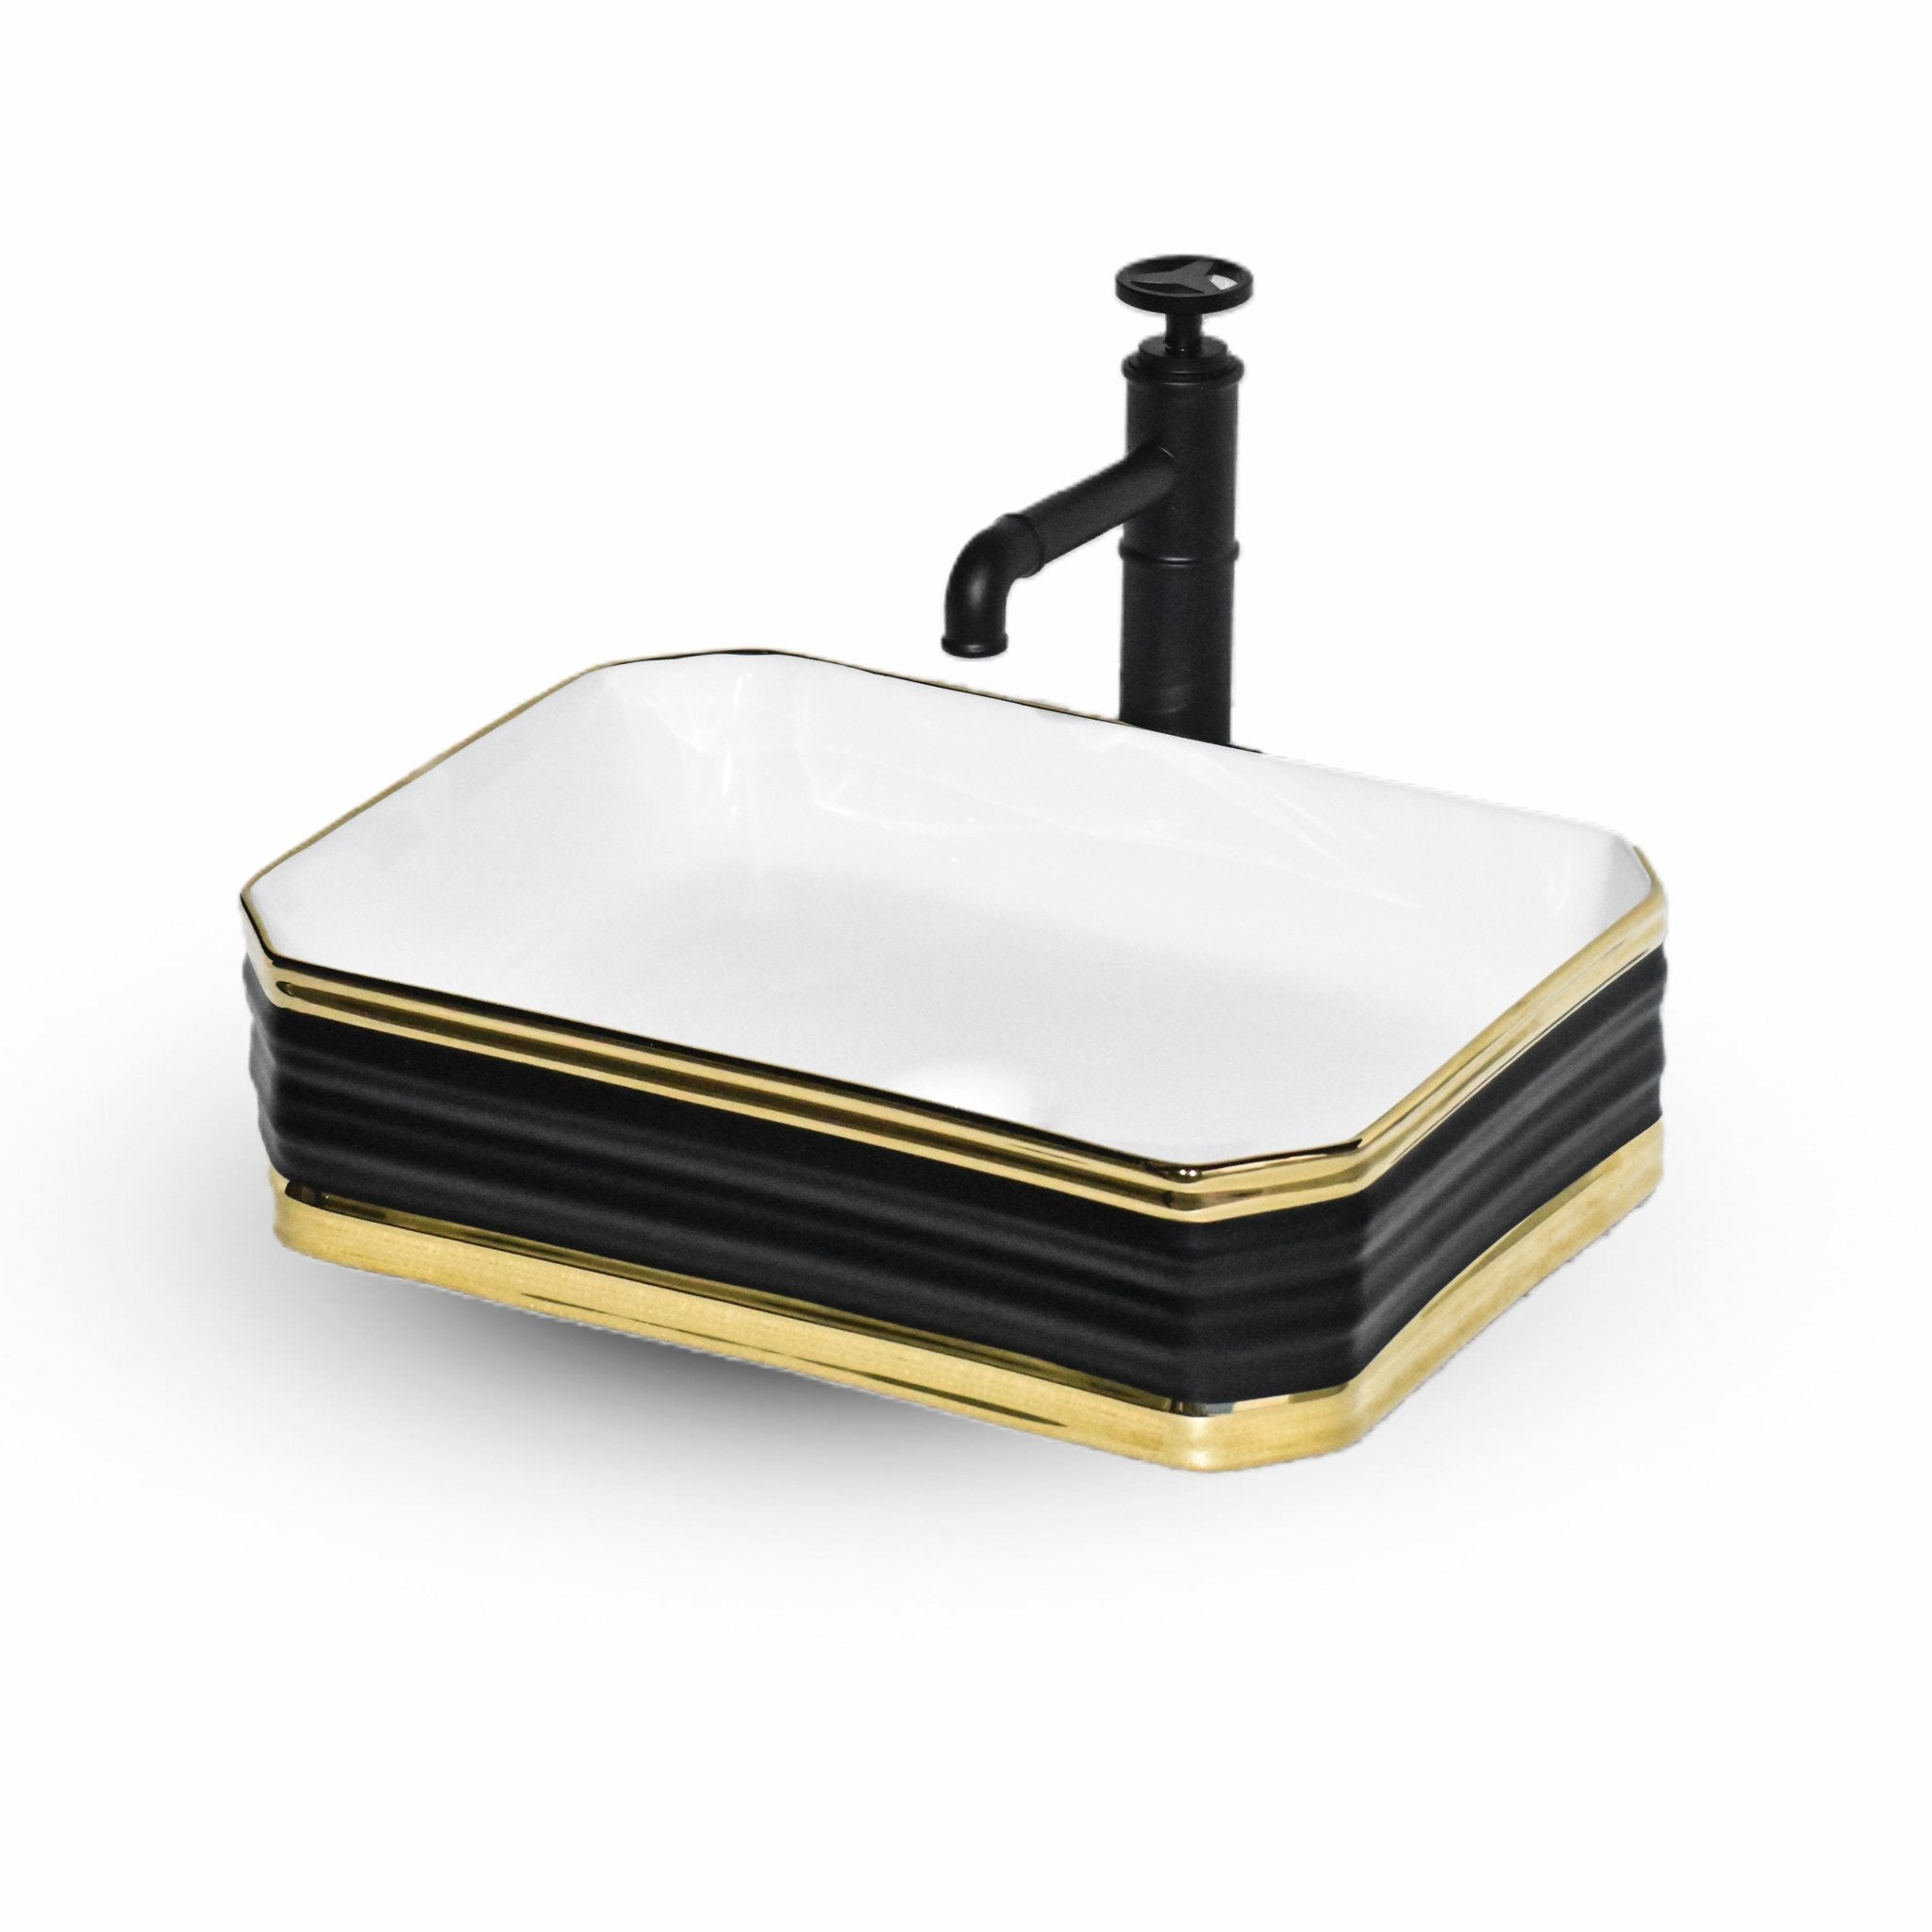 InArt Rectangle Bathroom Ceramic Vessel Sink Art Basin in Black Gold Color - InArt-Studio-USA